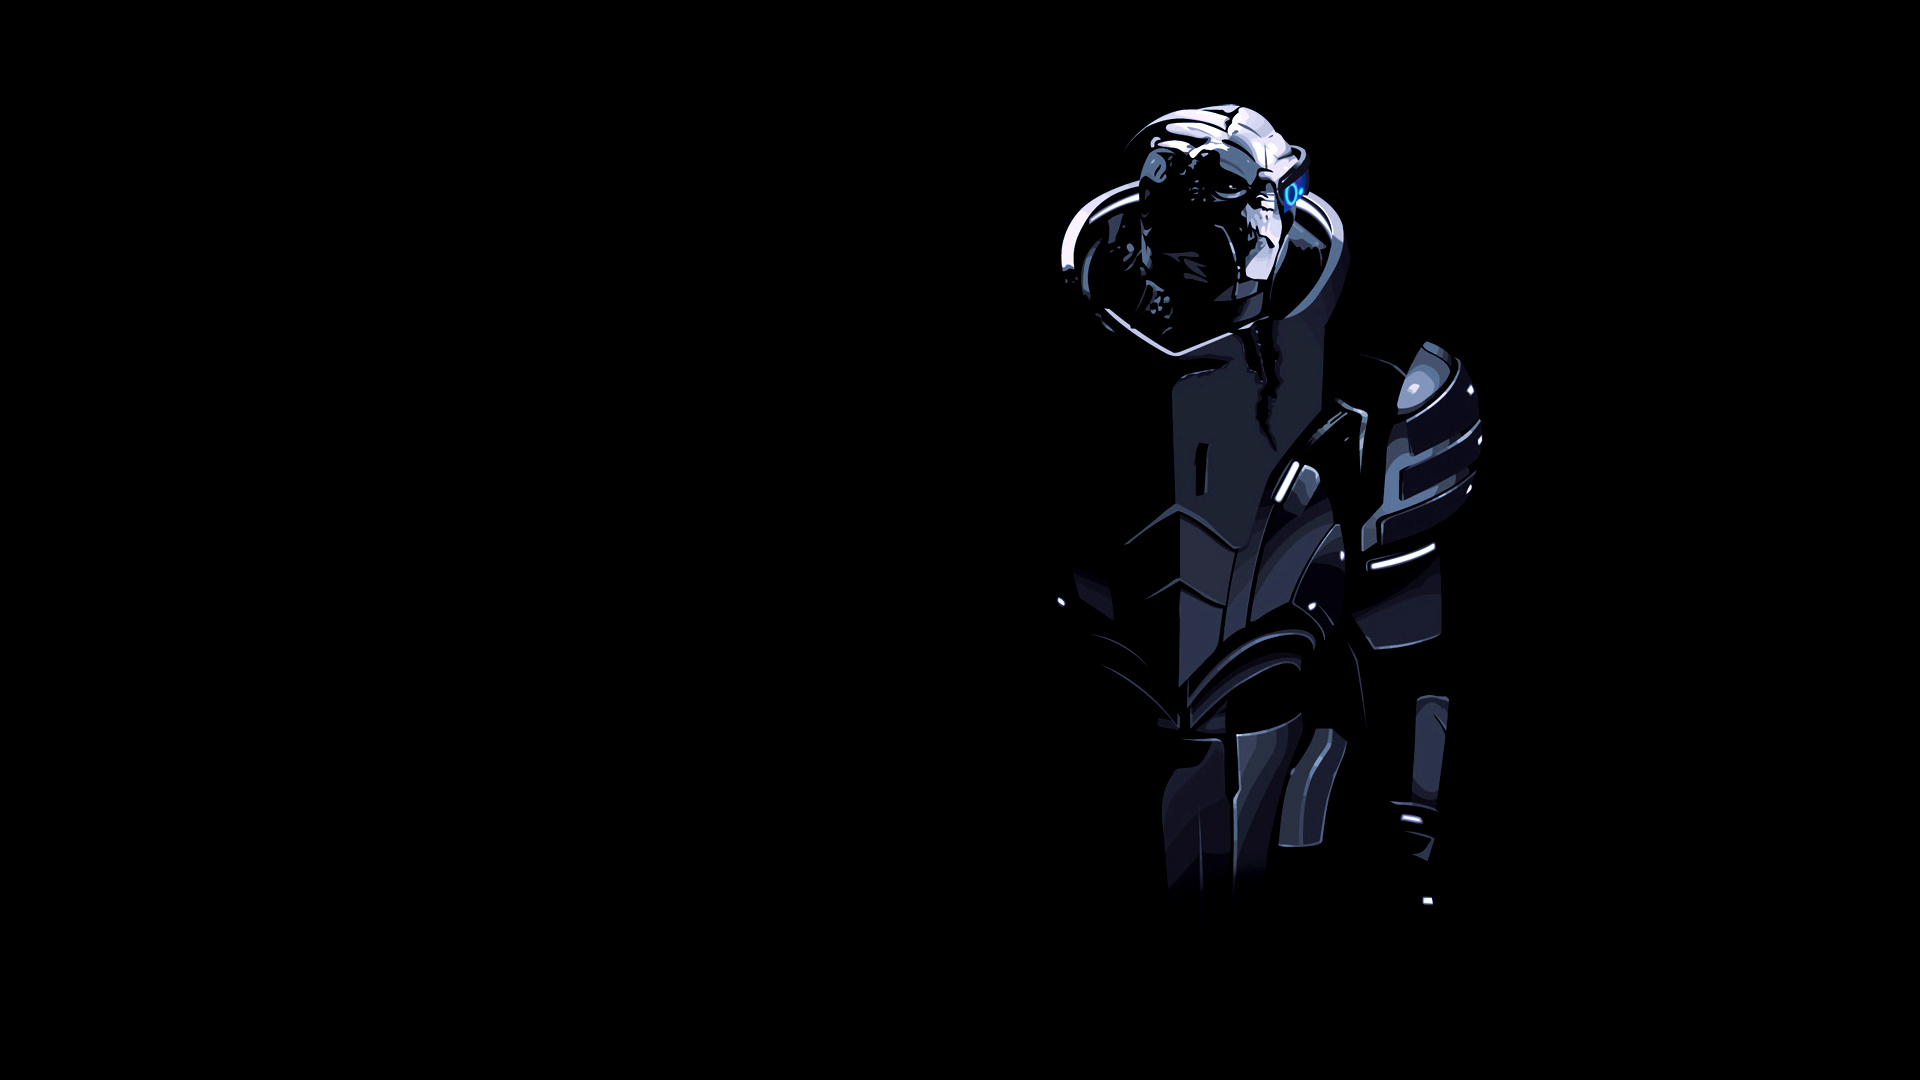 General 1920x1080 Mass Effect video games science fiction video game art fan art dark black background